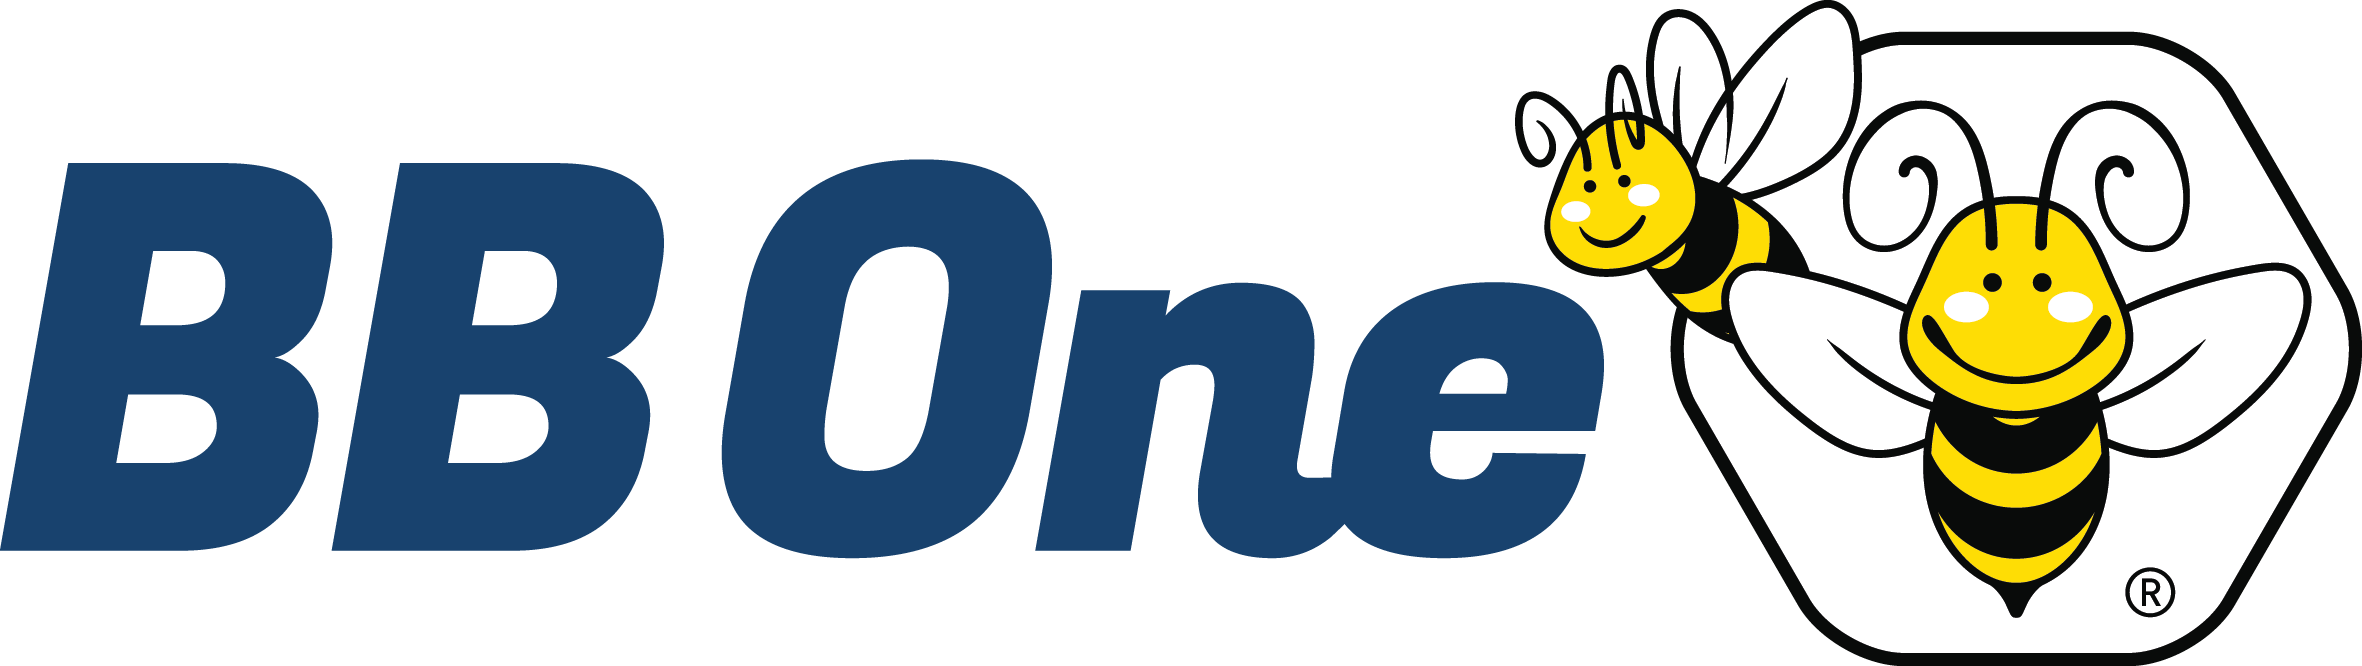 BeeBeeOne Logo